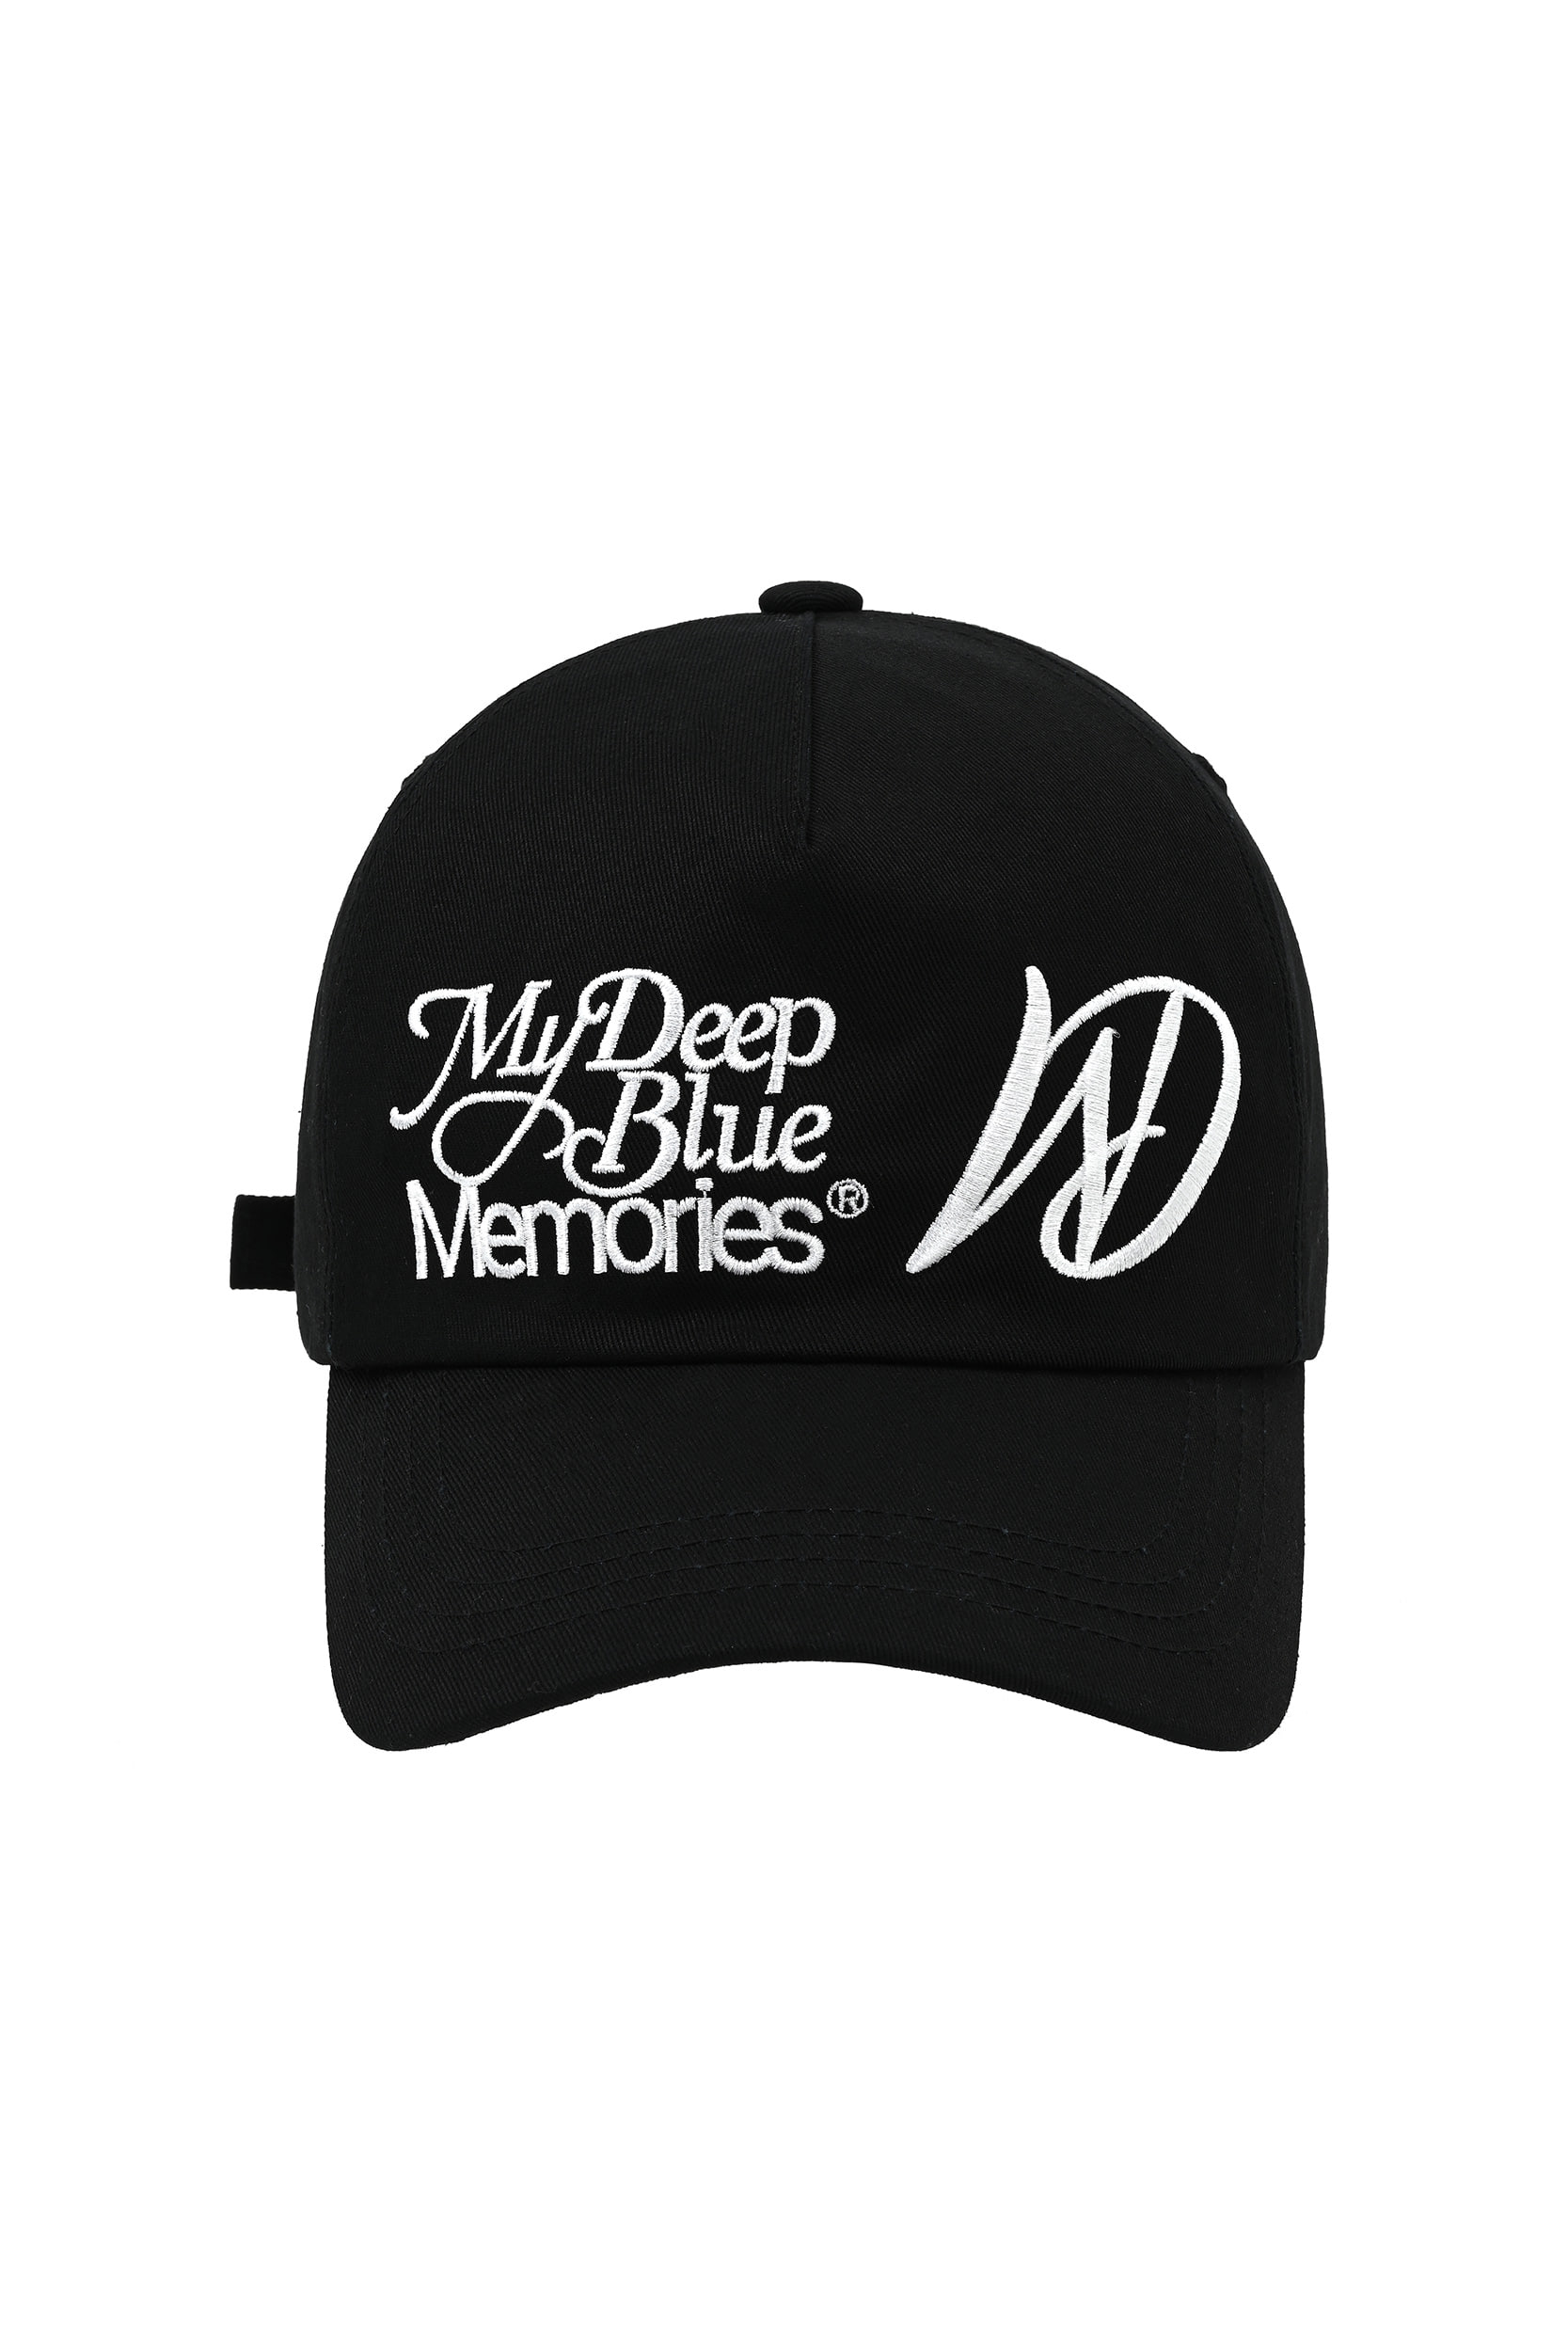 MM Double Logo cap black